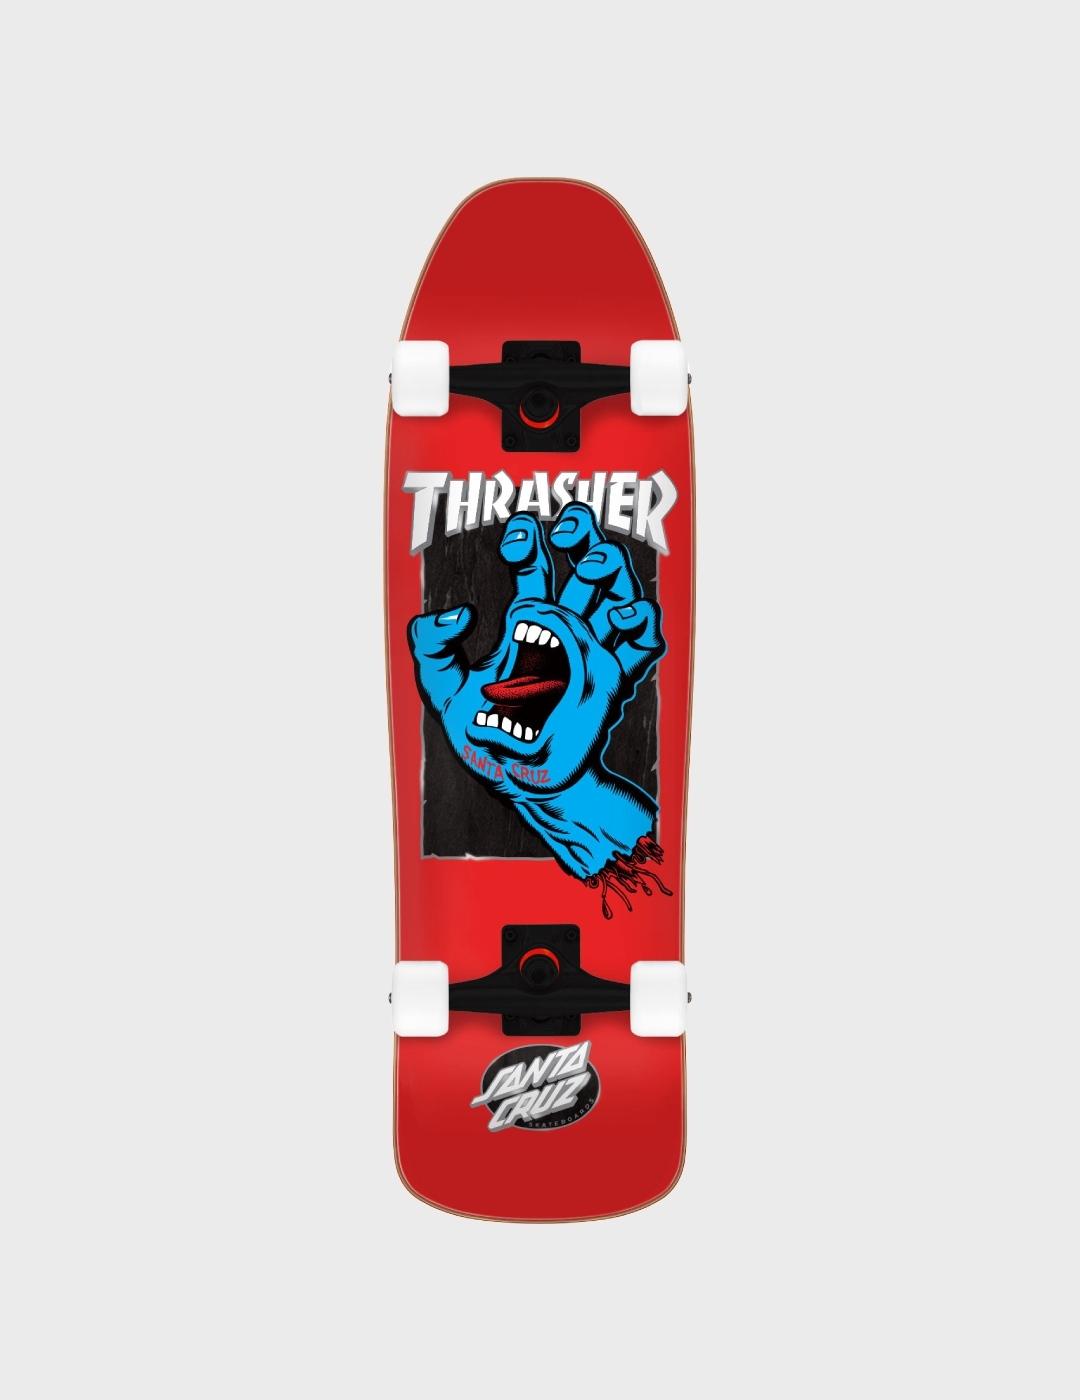 Skate Santa Cruz xThrasher Screaming Hand 9.35x31.7